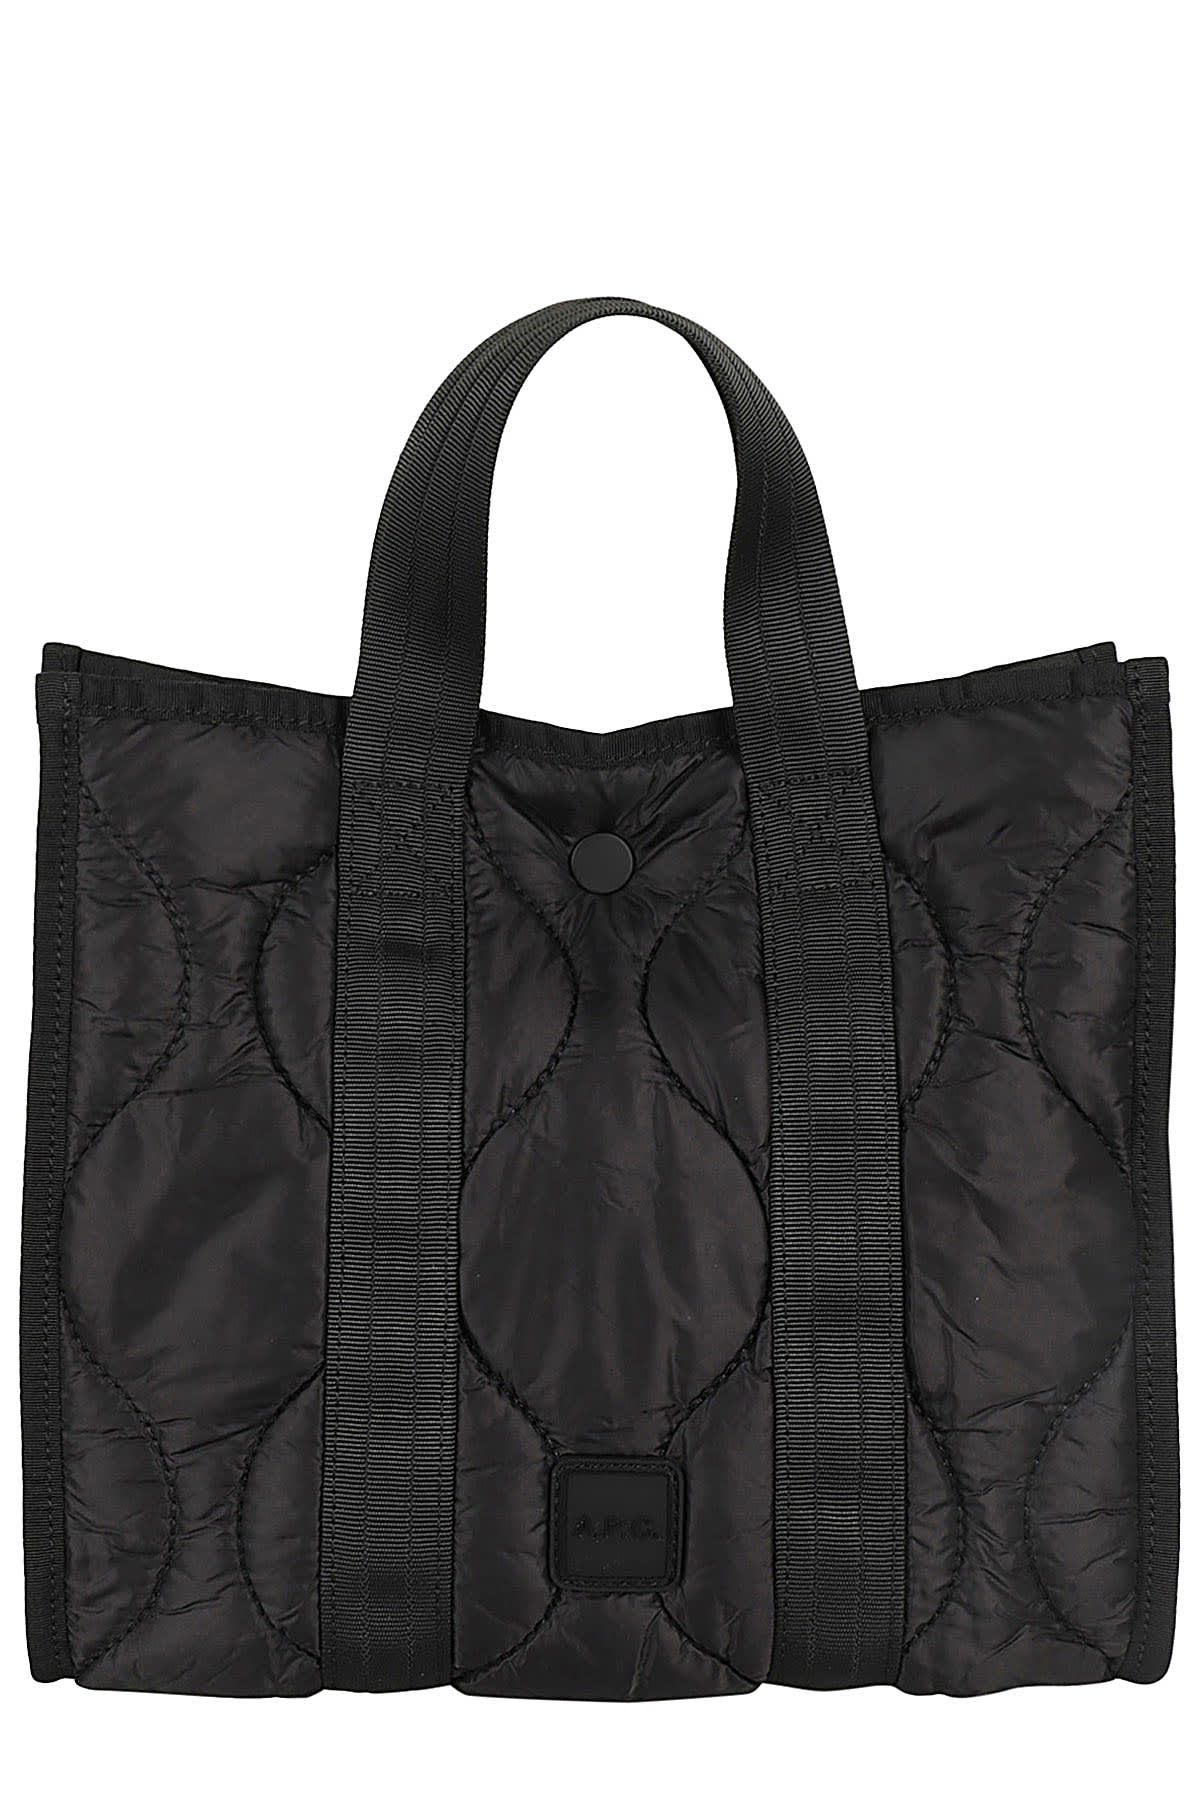 A. P.C. Black Nylon Small Louise Shopping Bag